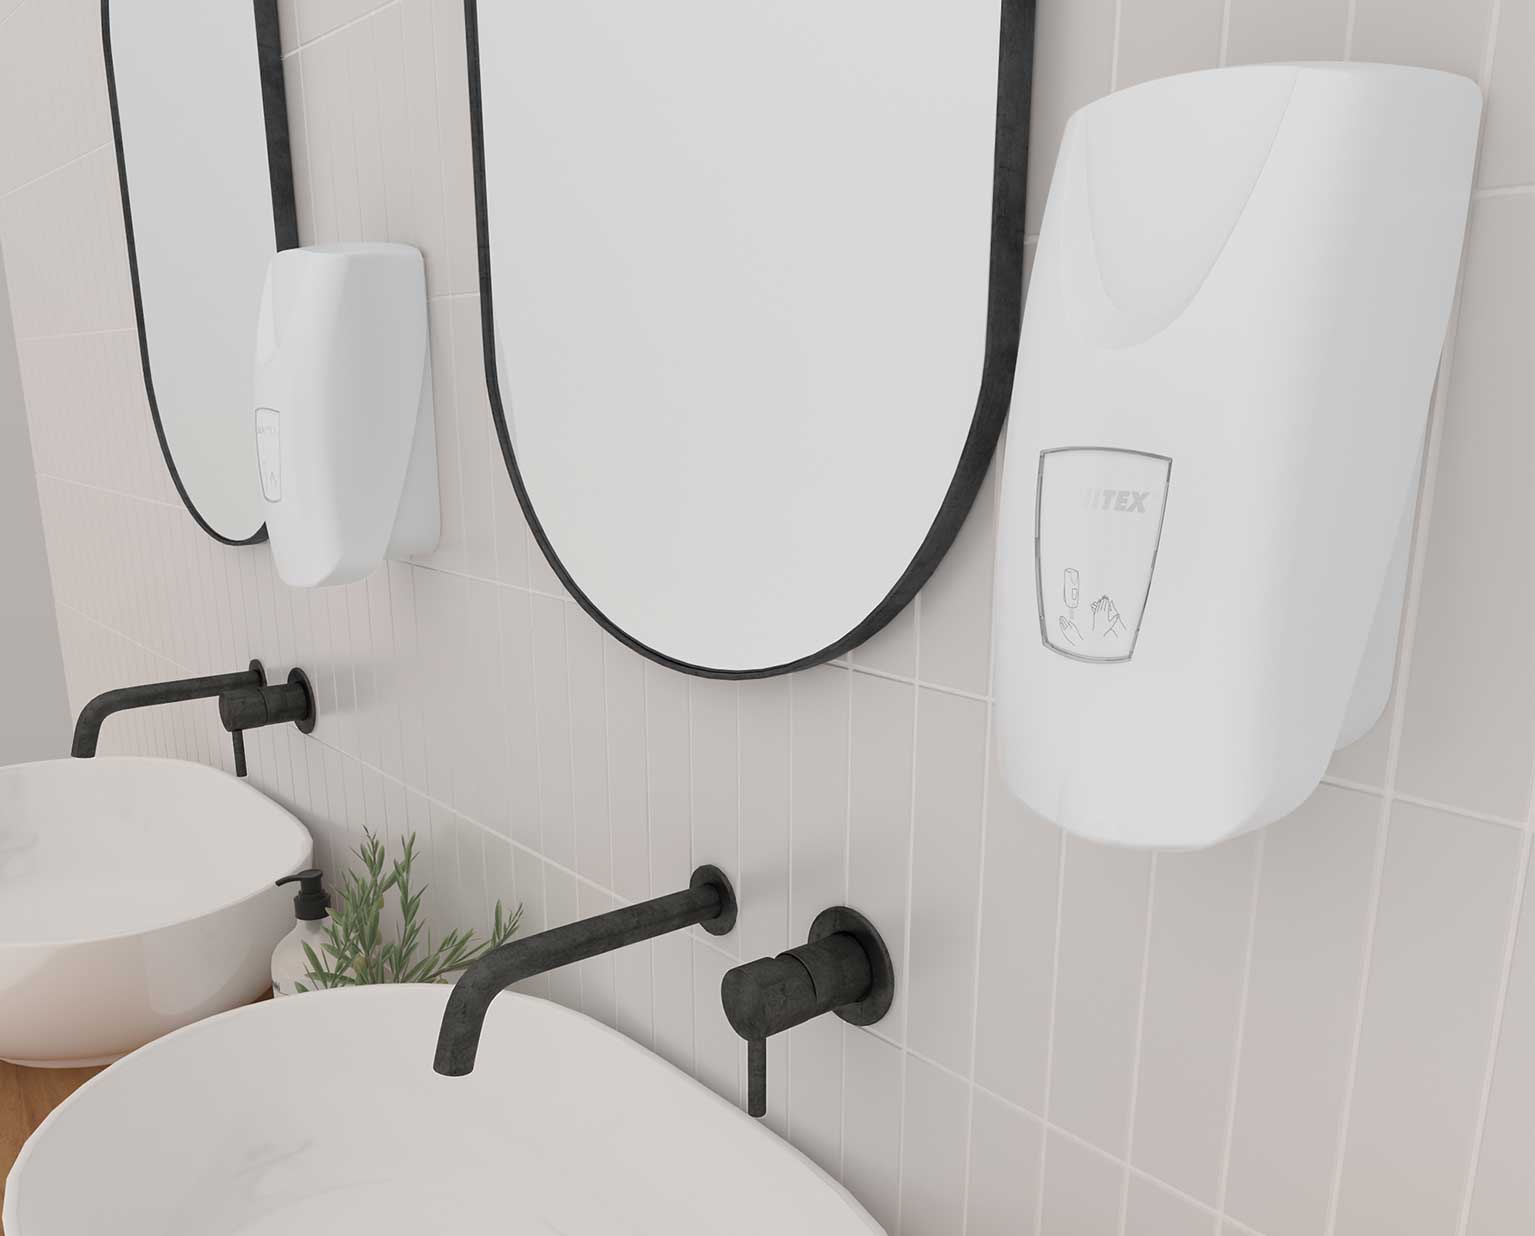 Sanitex Soap - Hotels - Washrooms